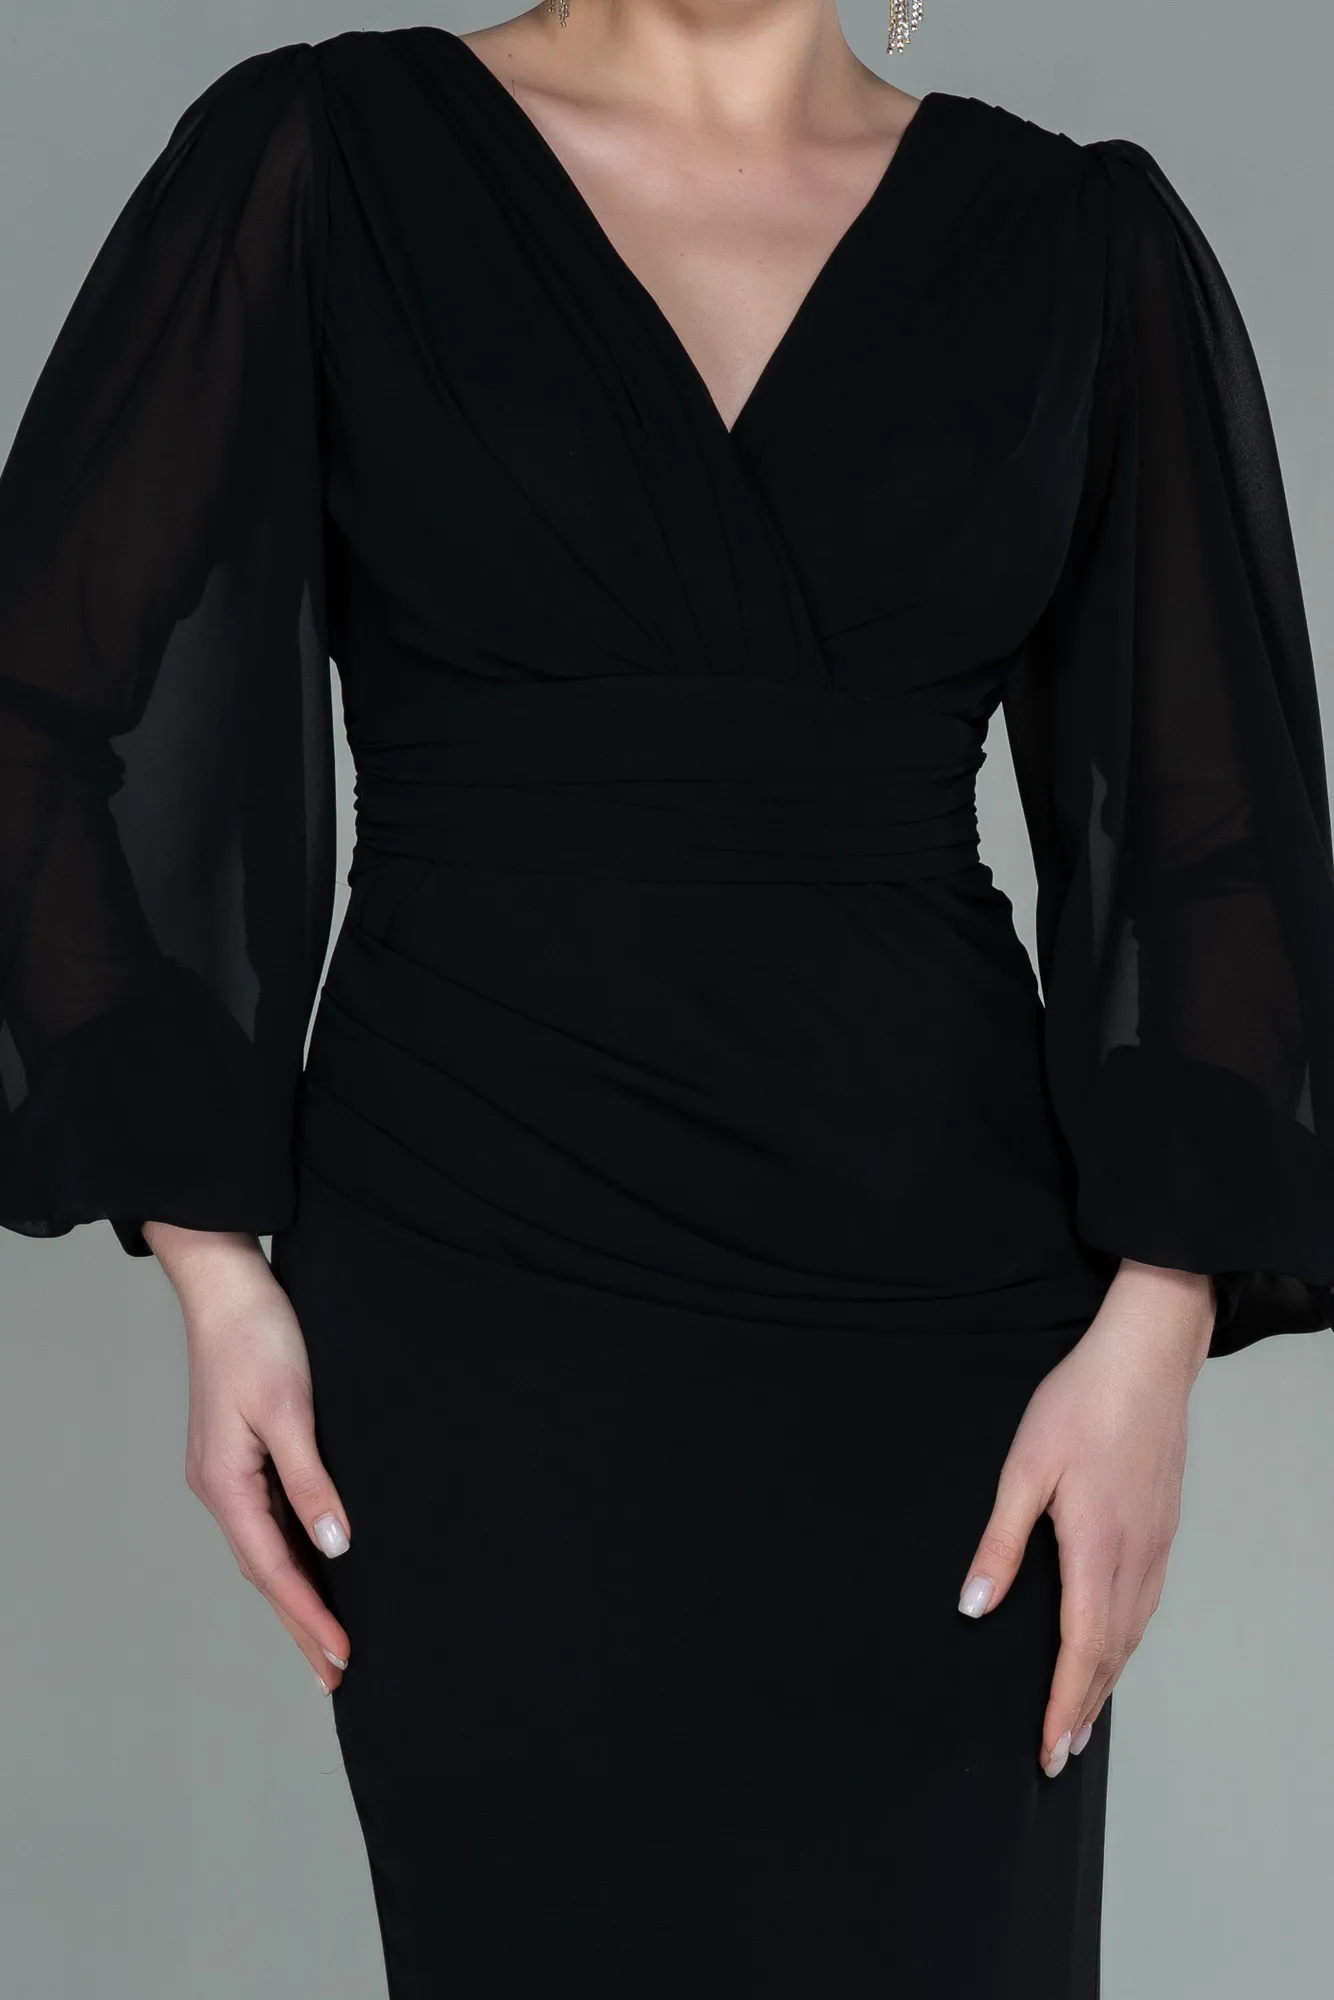 Black-Long Chiffon Evening Dress ABU2818